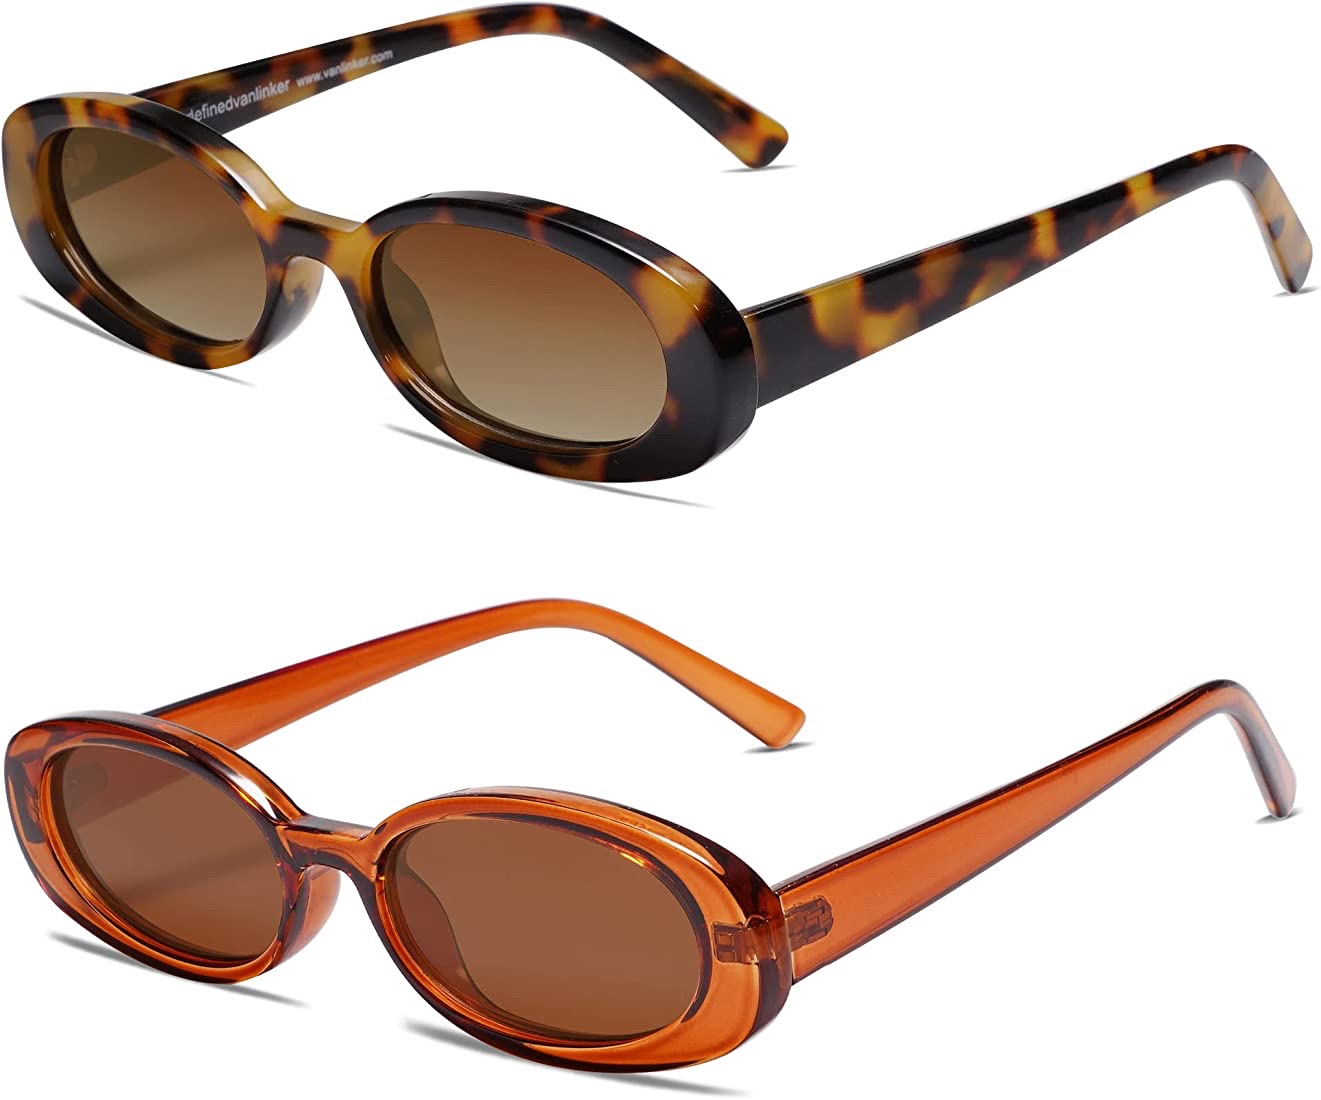 Amazon.com: Vanlinker 90s复古墨镜Sunglasses for Women Men Polarized Retro Oval Sunglasses Small Narrow 2 Pack